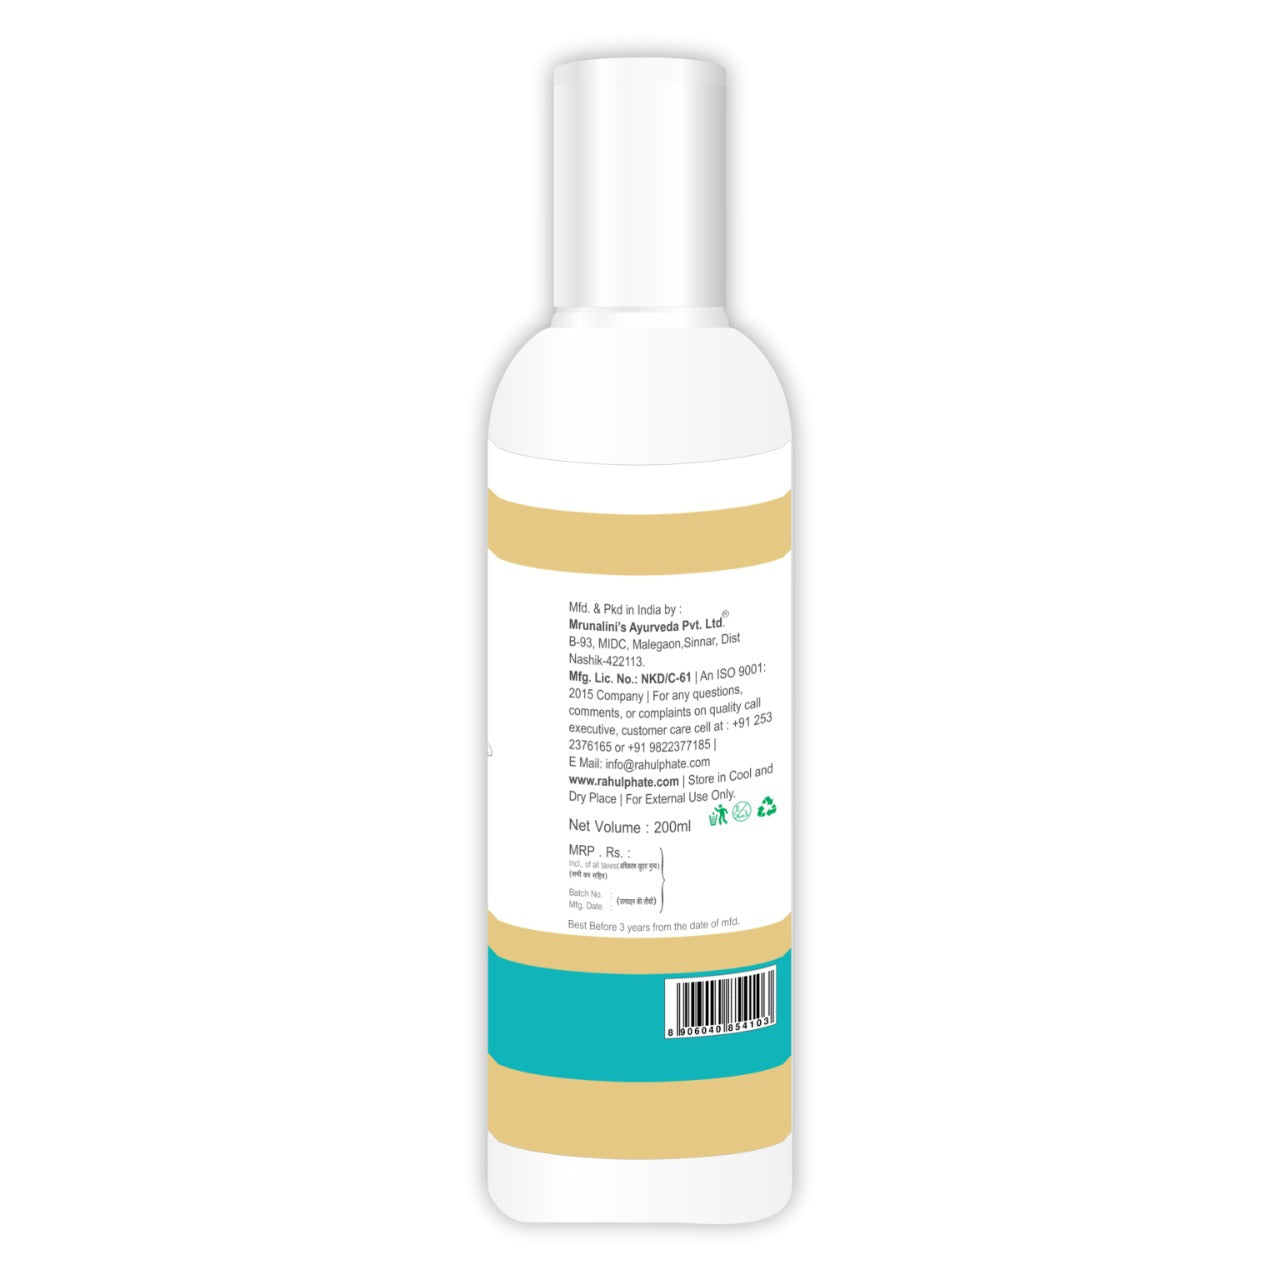 Ana-Zoom Hair Cleanser Arginine-Pentothenate Shampoo